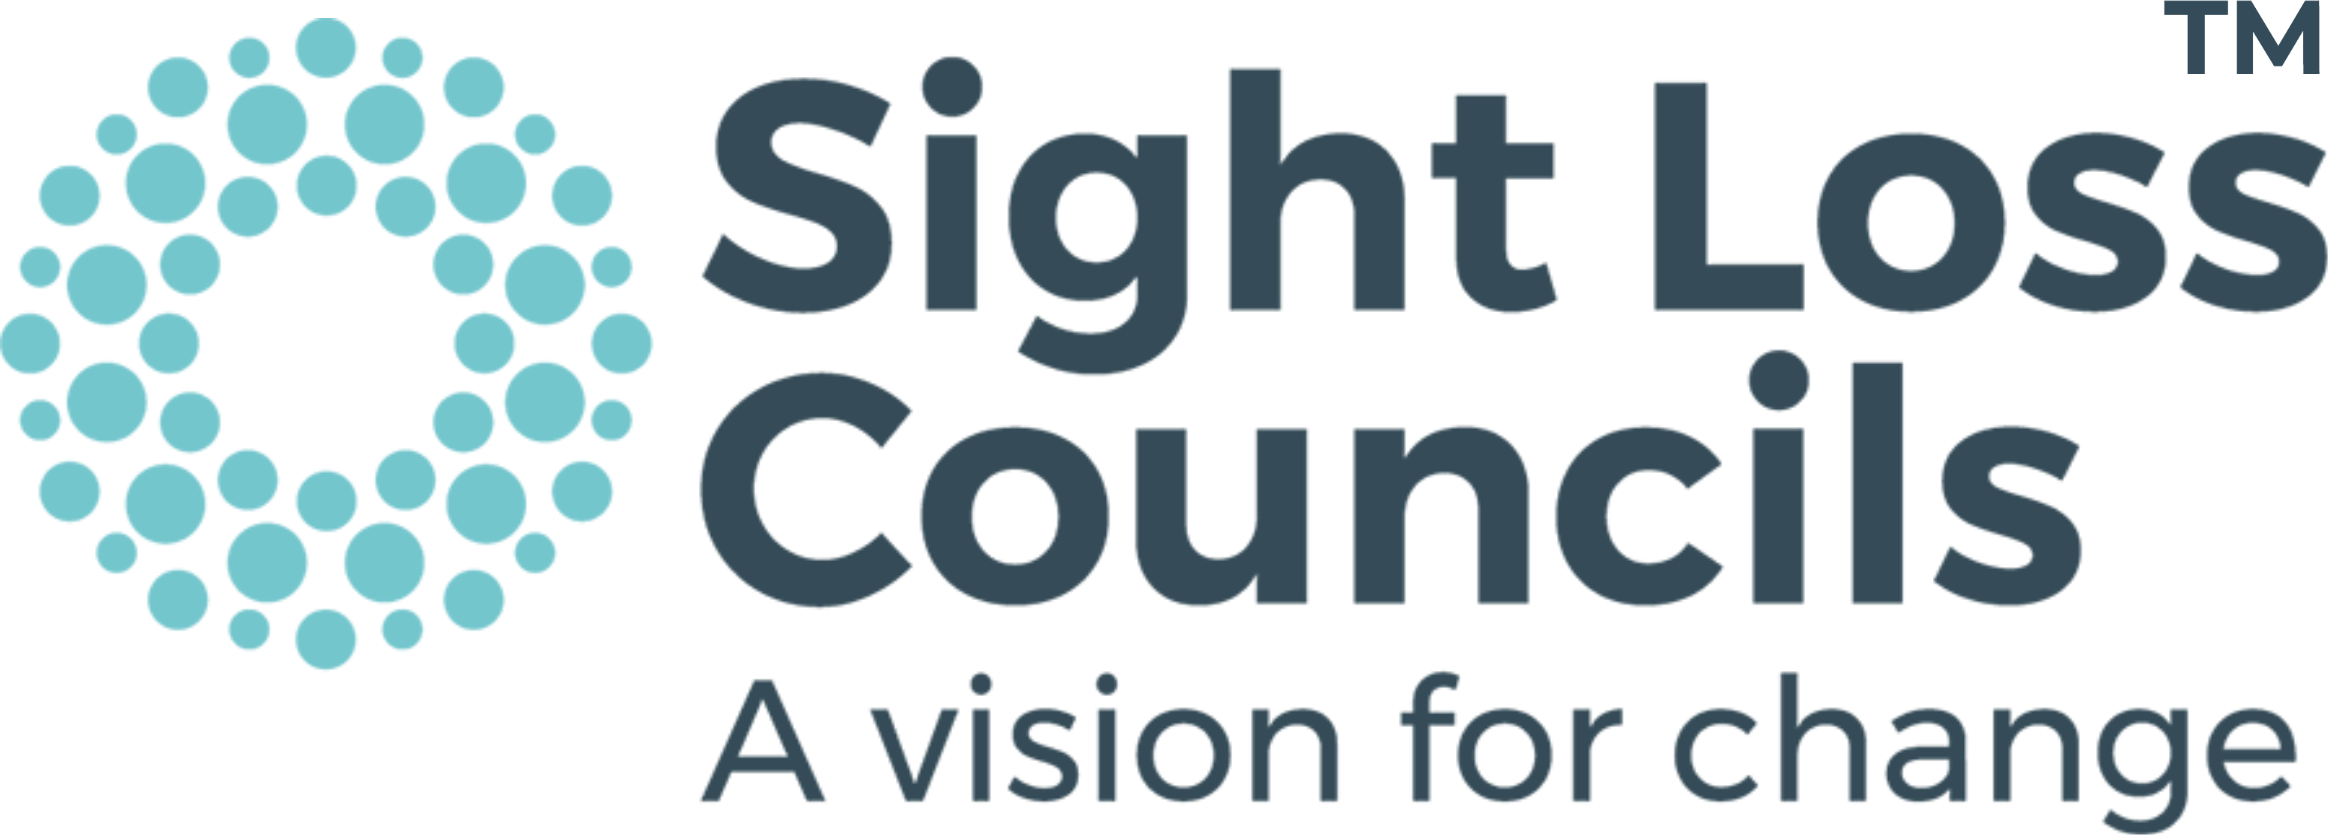 Site Loss Council Logo